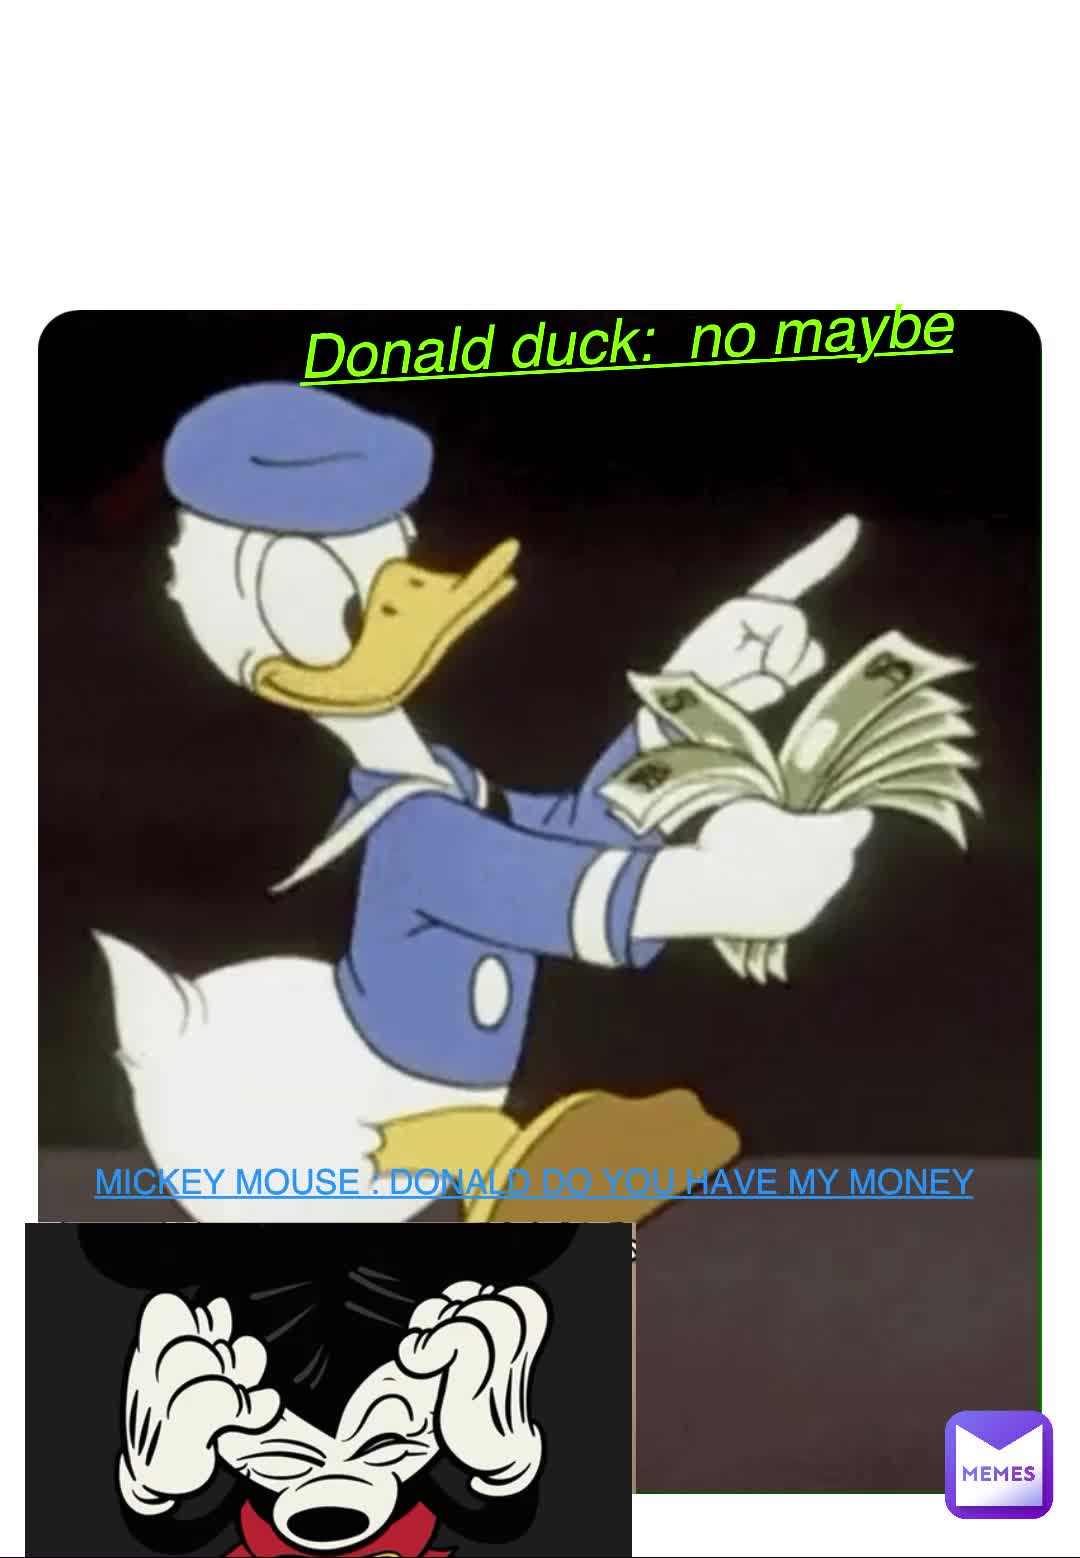 donald duck money gif